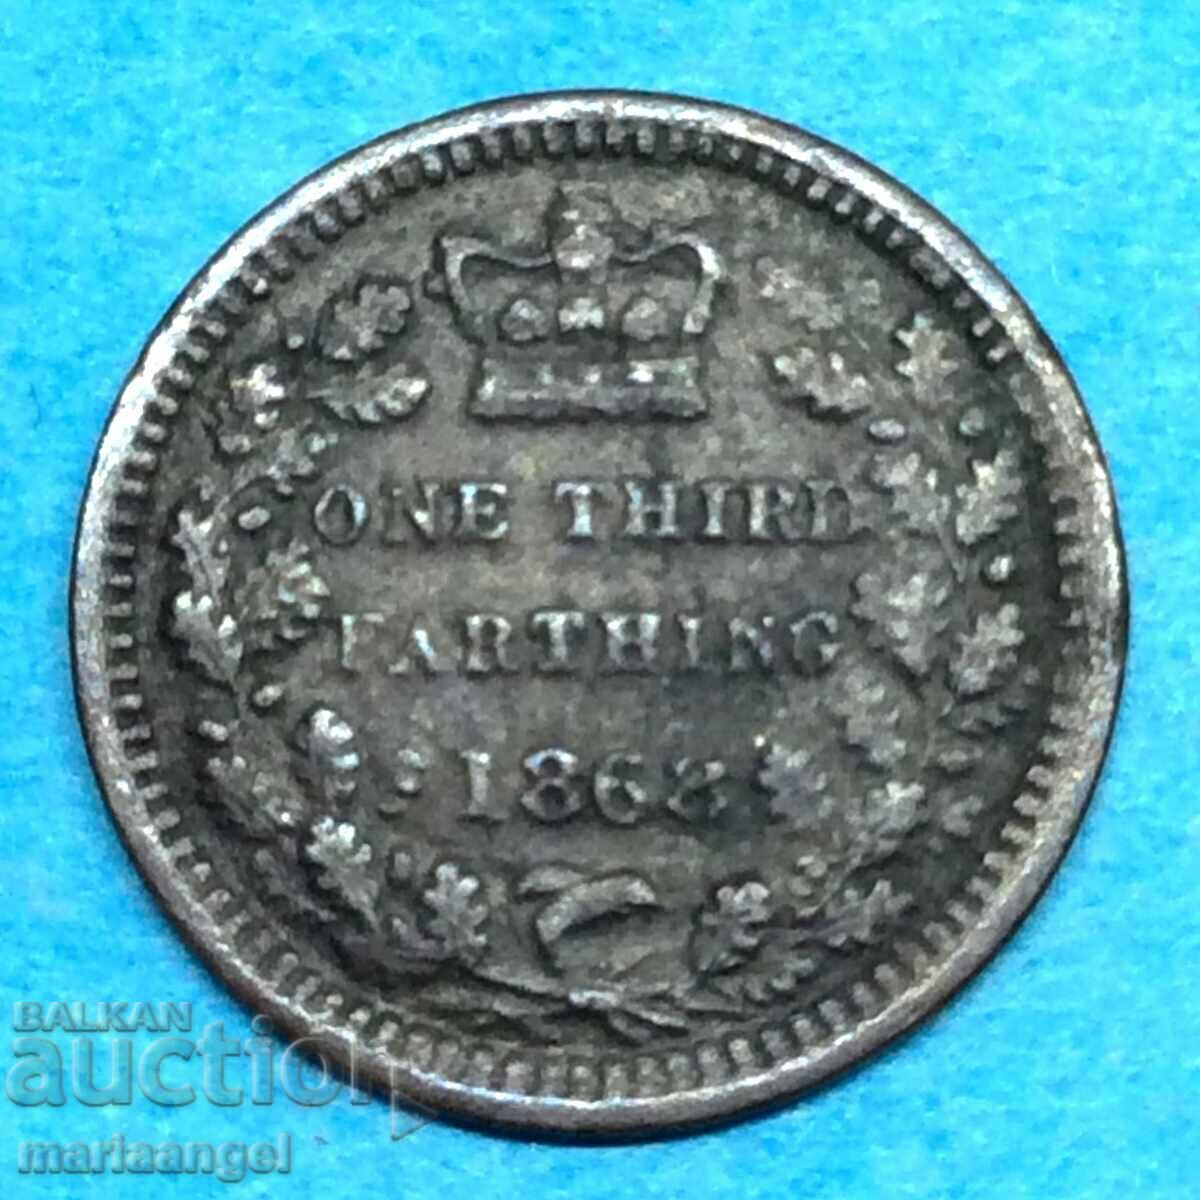 Great Britain 1/3 Farthing 1868 Victoria - Rare